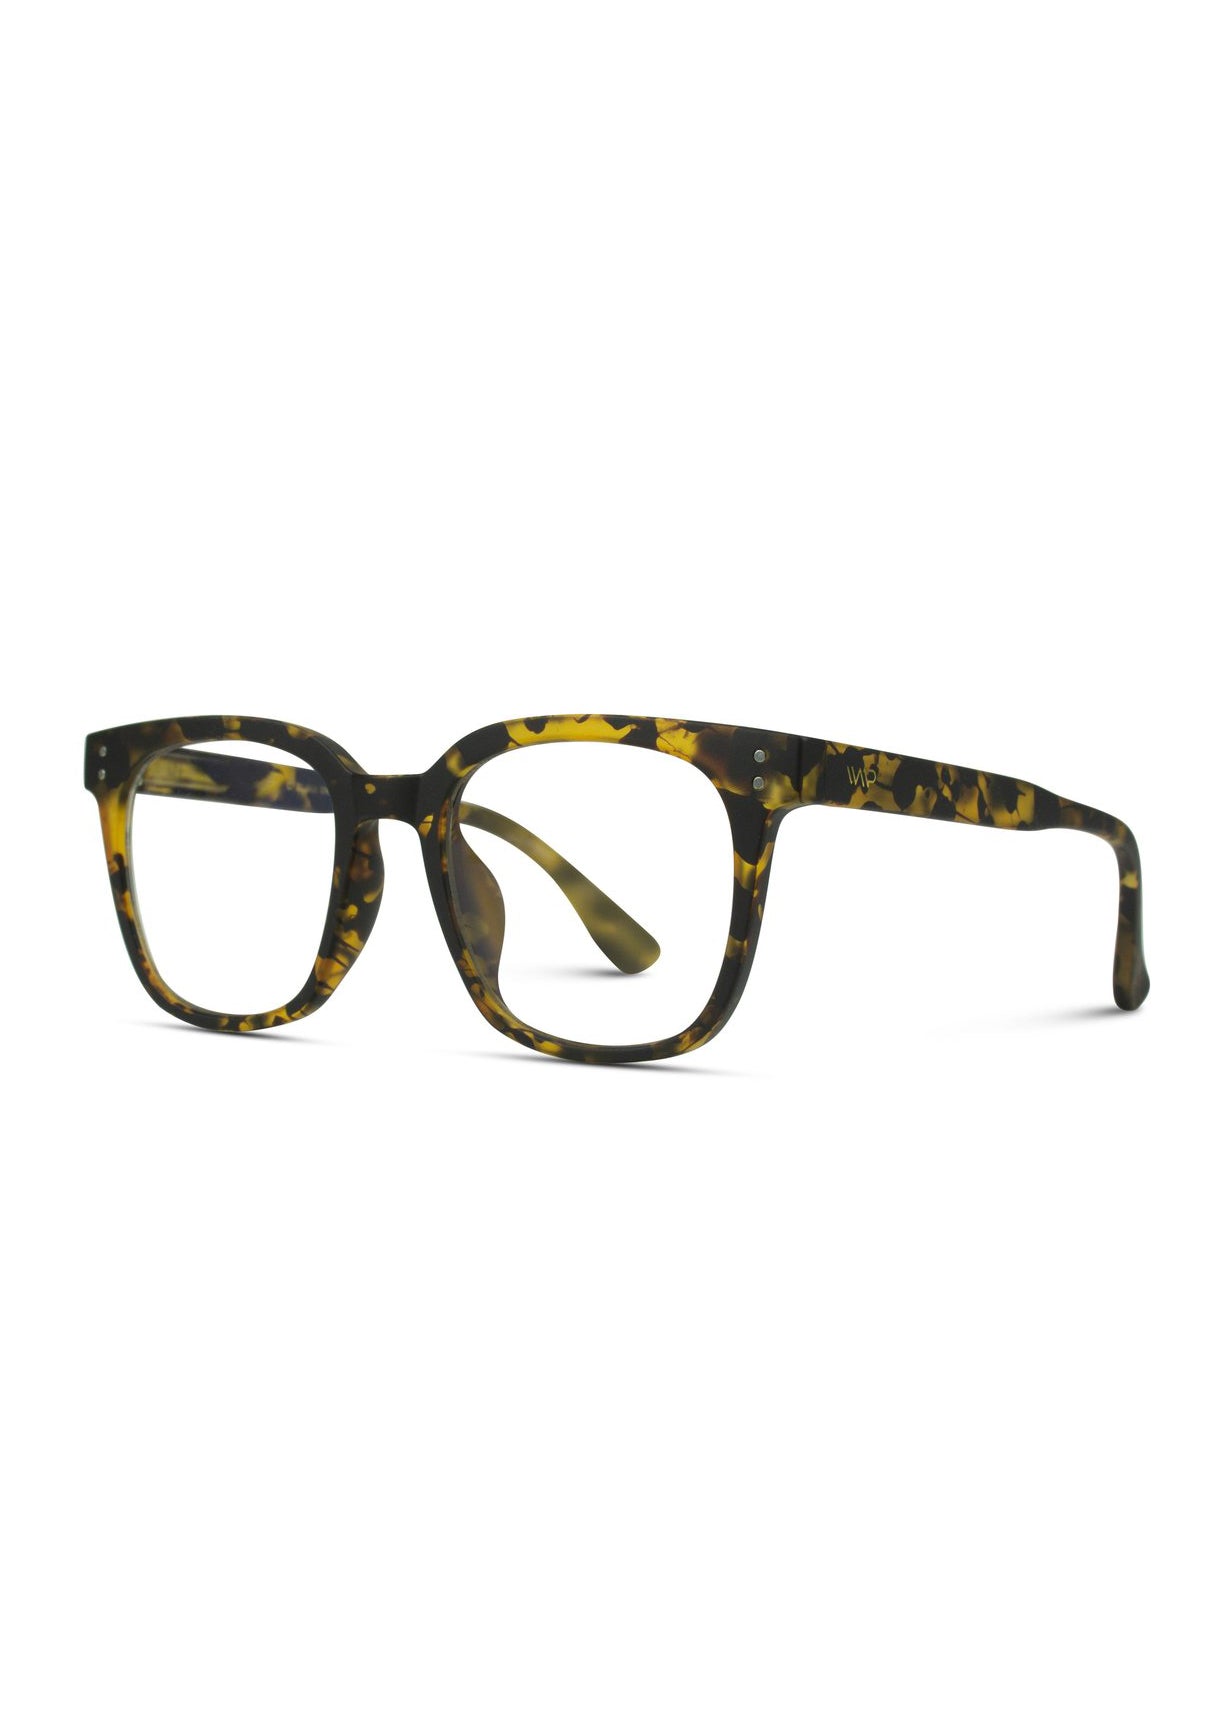 Dark Tortoise Square Blue Light Glasses - FINAL SALE Accessories